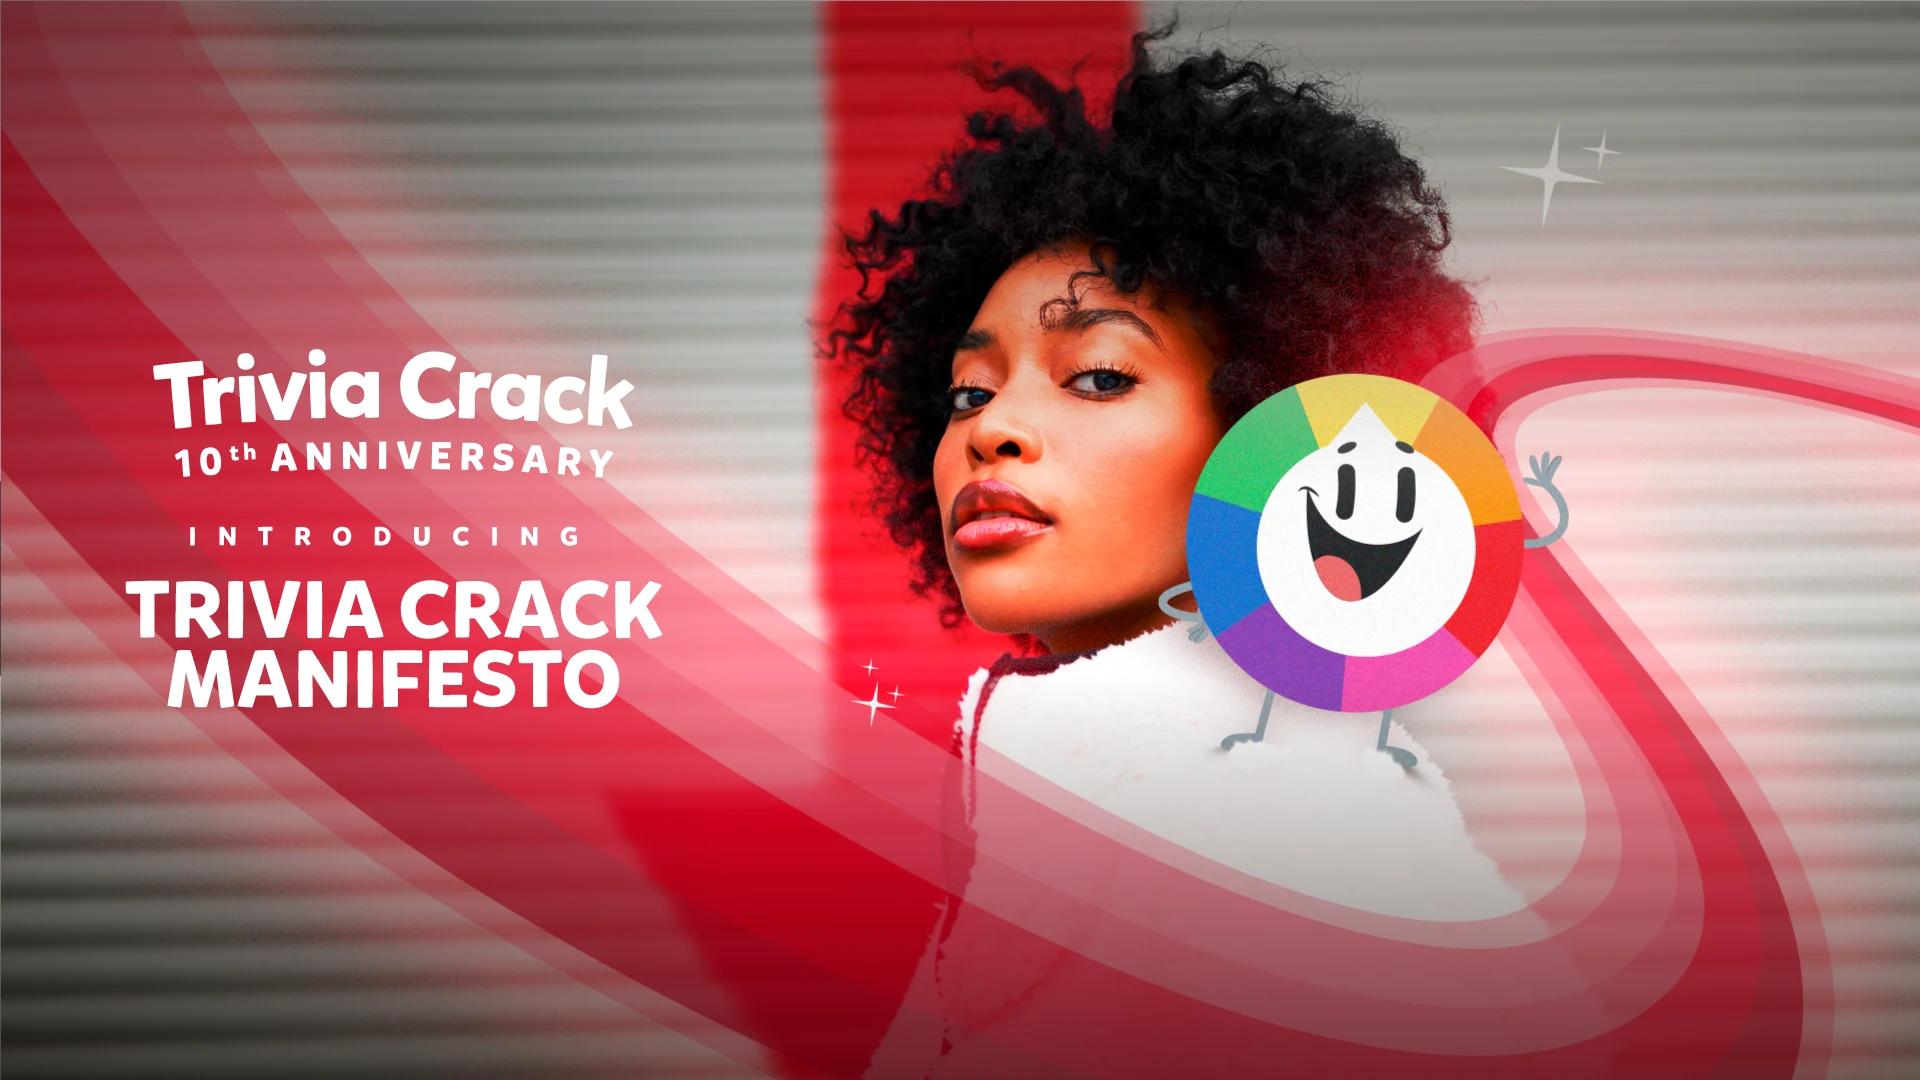 trivia crack manifesto poster